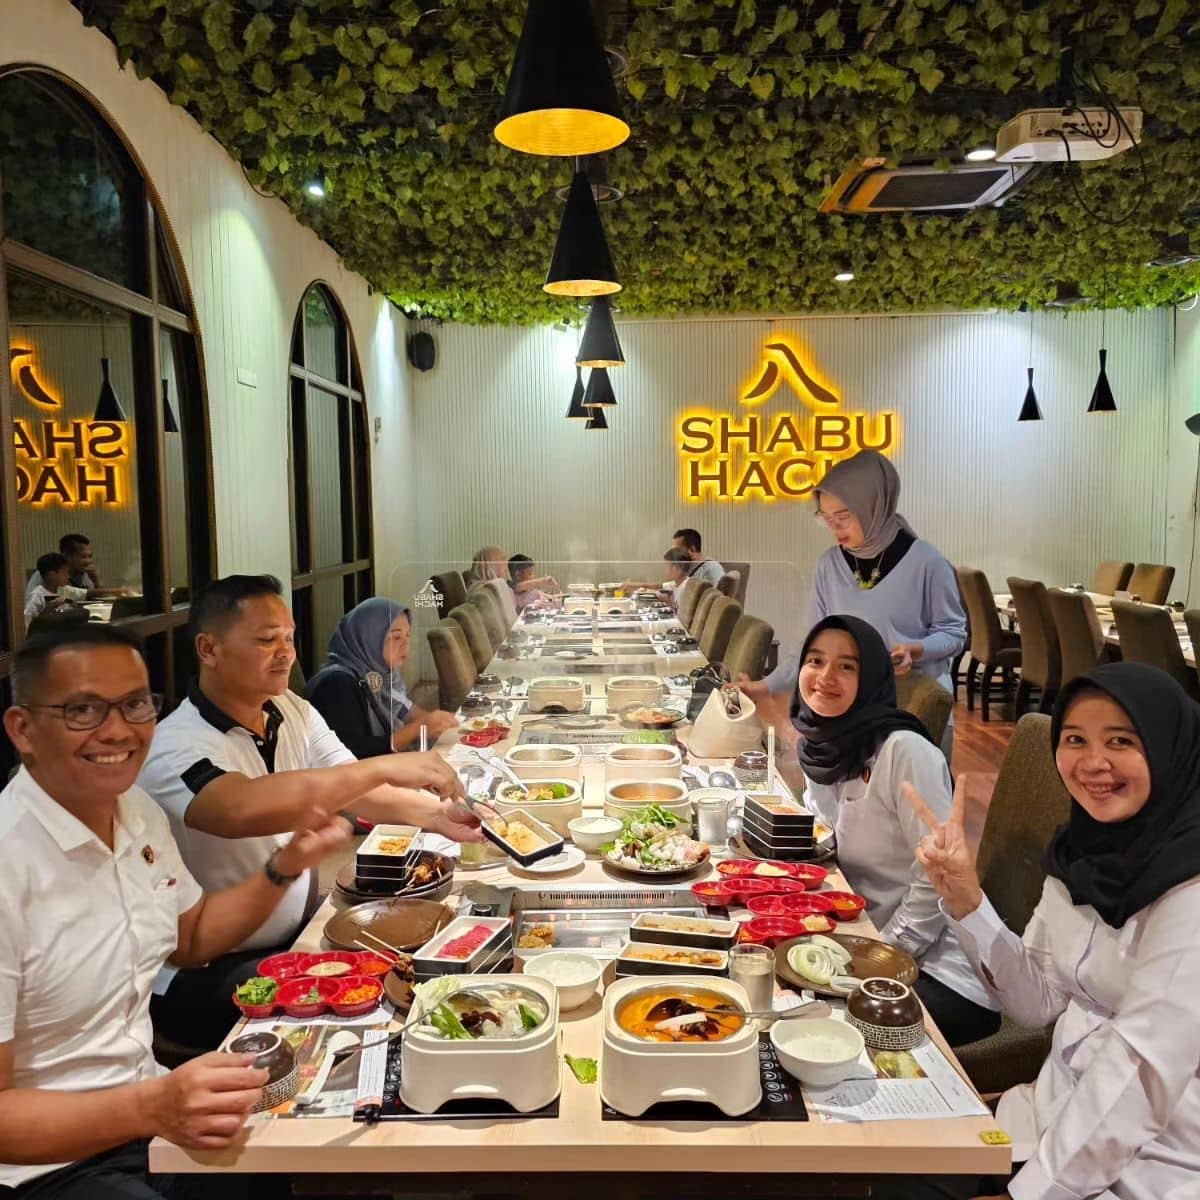 All You Can Eat Bandung Shabu Hachi Image From @darsono981